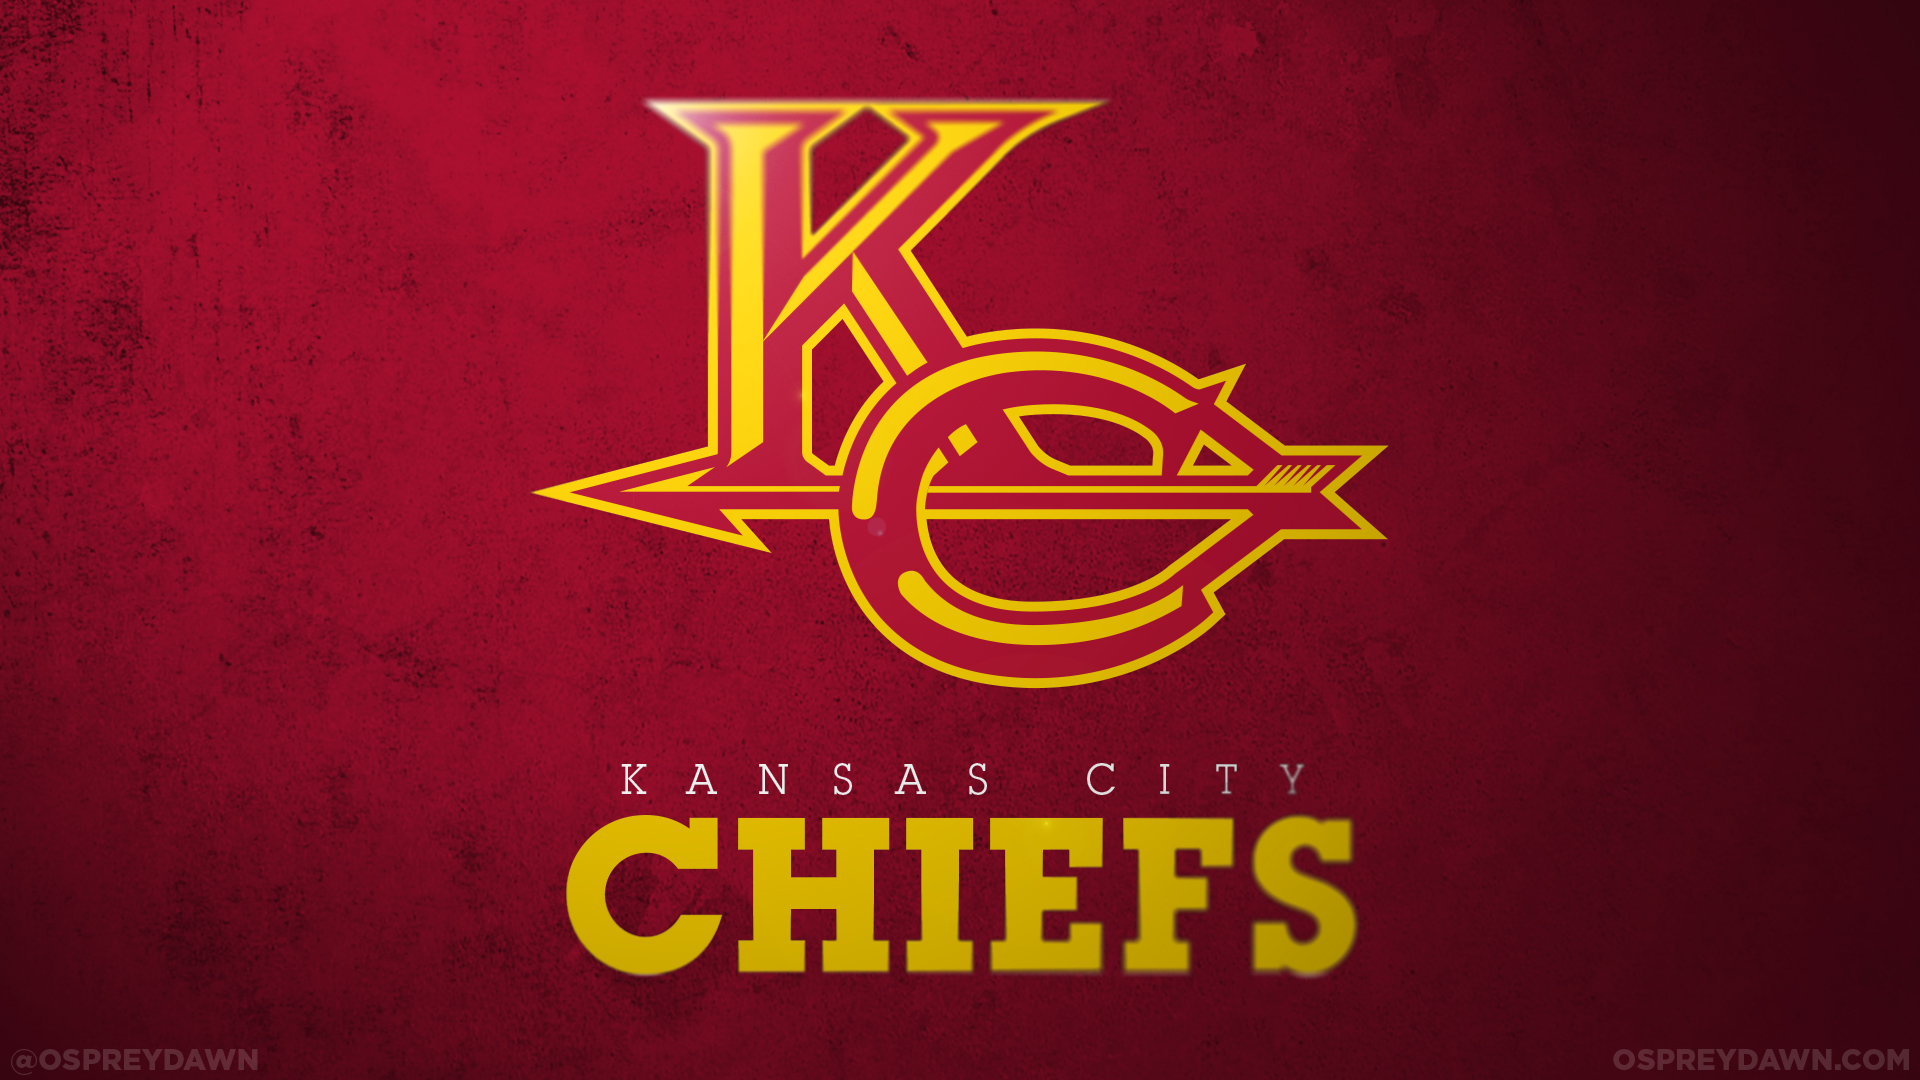 Kansas City Chiefs Football Team Logo